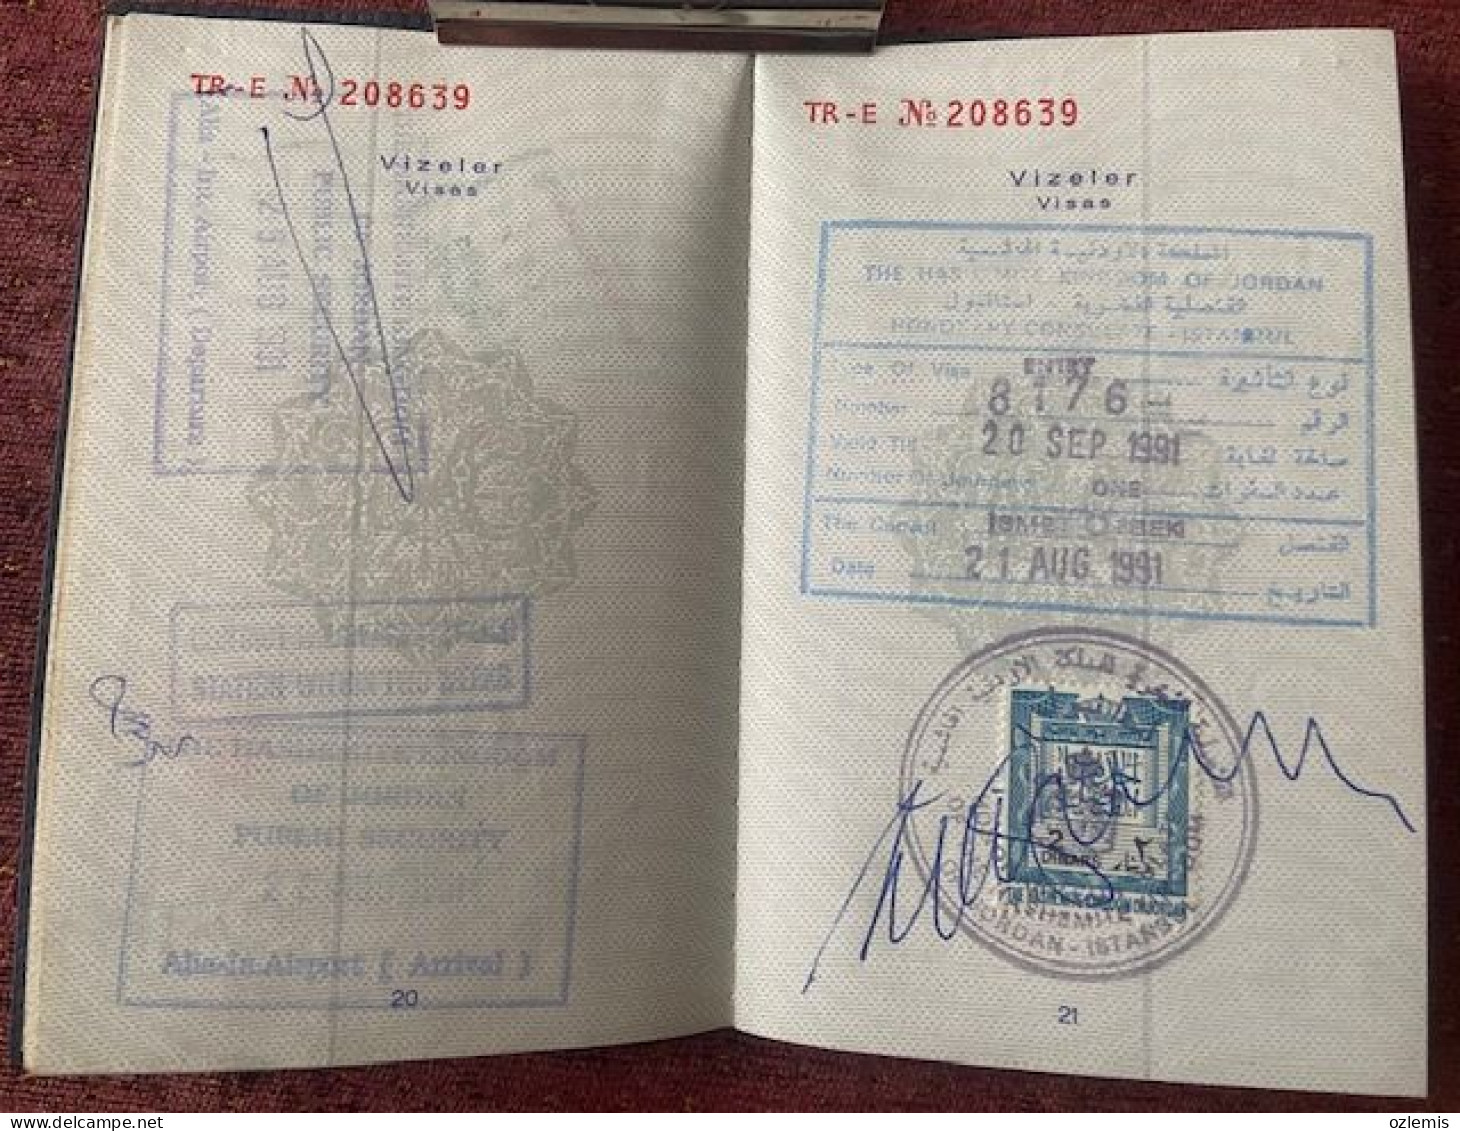 PASSPORT  PASSEPORT, 1989 ,USED,DEUTSCHLAND,SUISSE,FRANCE,JORDAN,ESPANA,MAGYAR,VİSA AND FISCAL